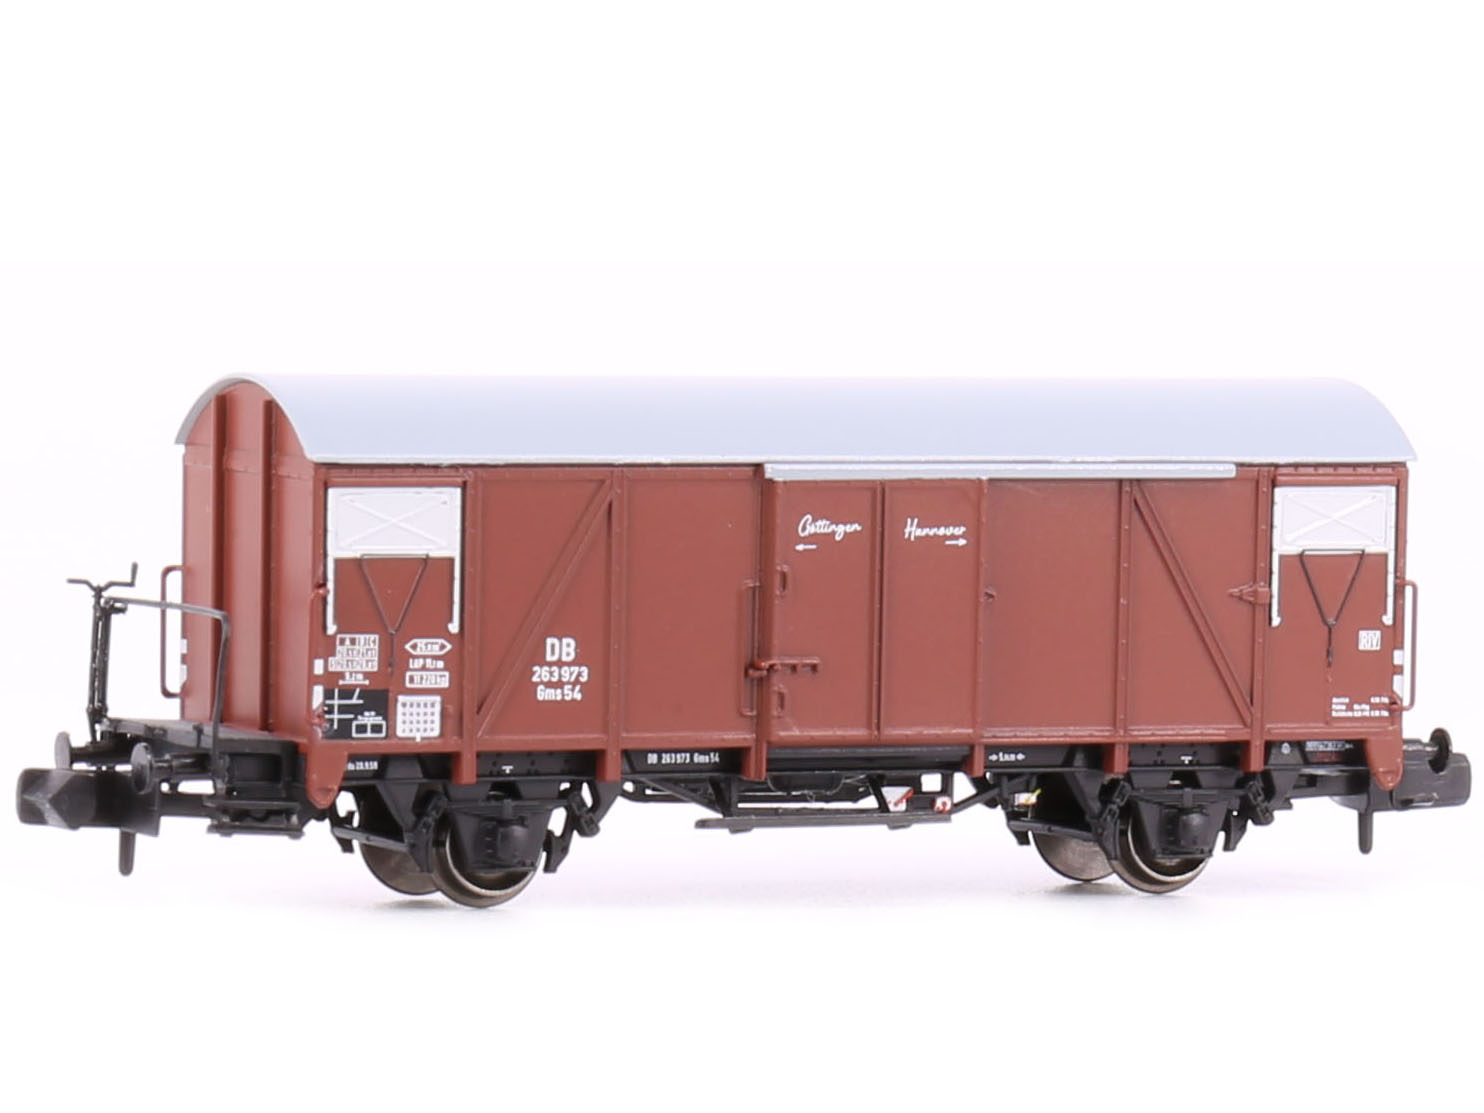 N Scale - Modellbahn Union - MU_N-G54007 - Covered wagon, Gms - Deutsche Bundesbahn - 263 973